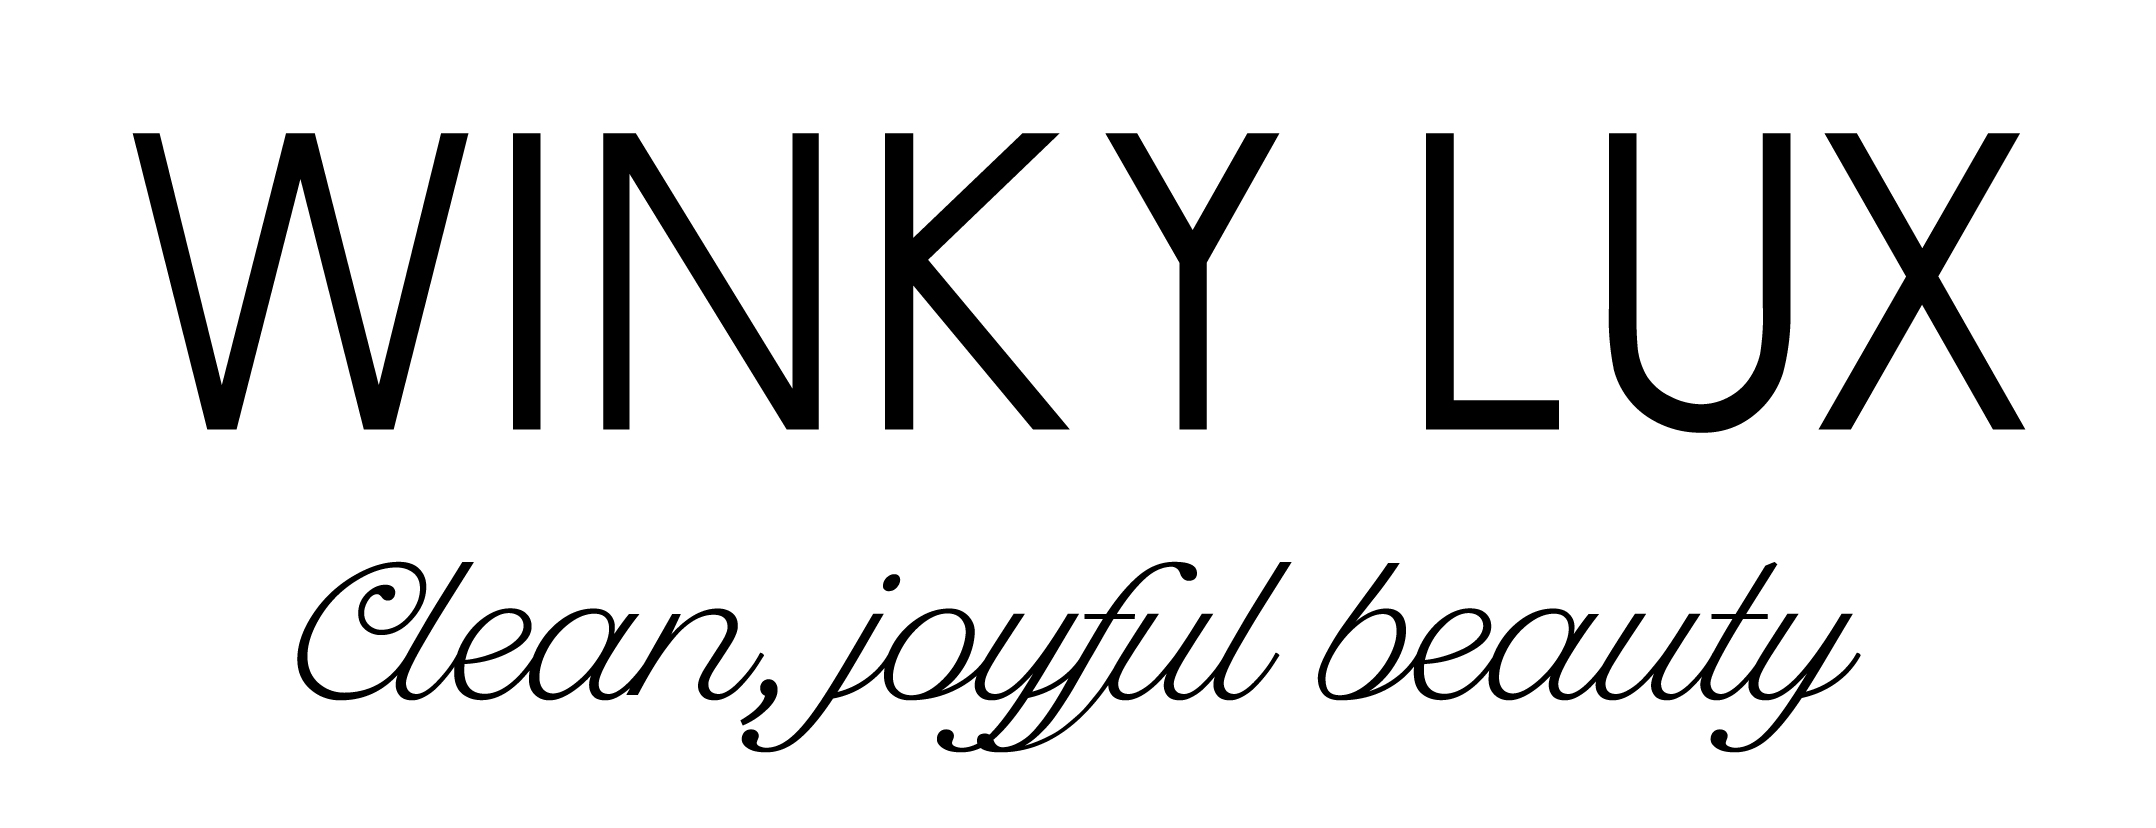 Winky Lux Коды скидок 